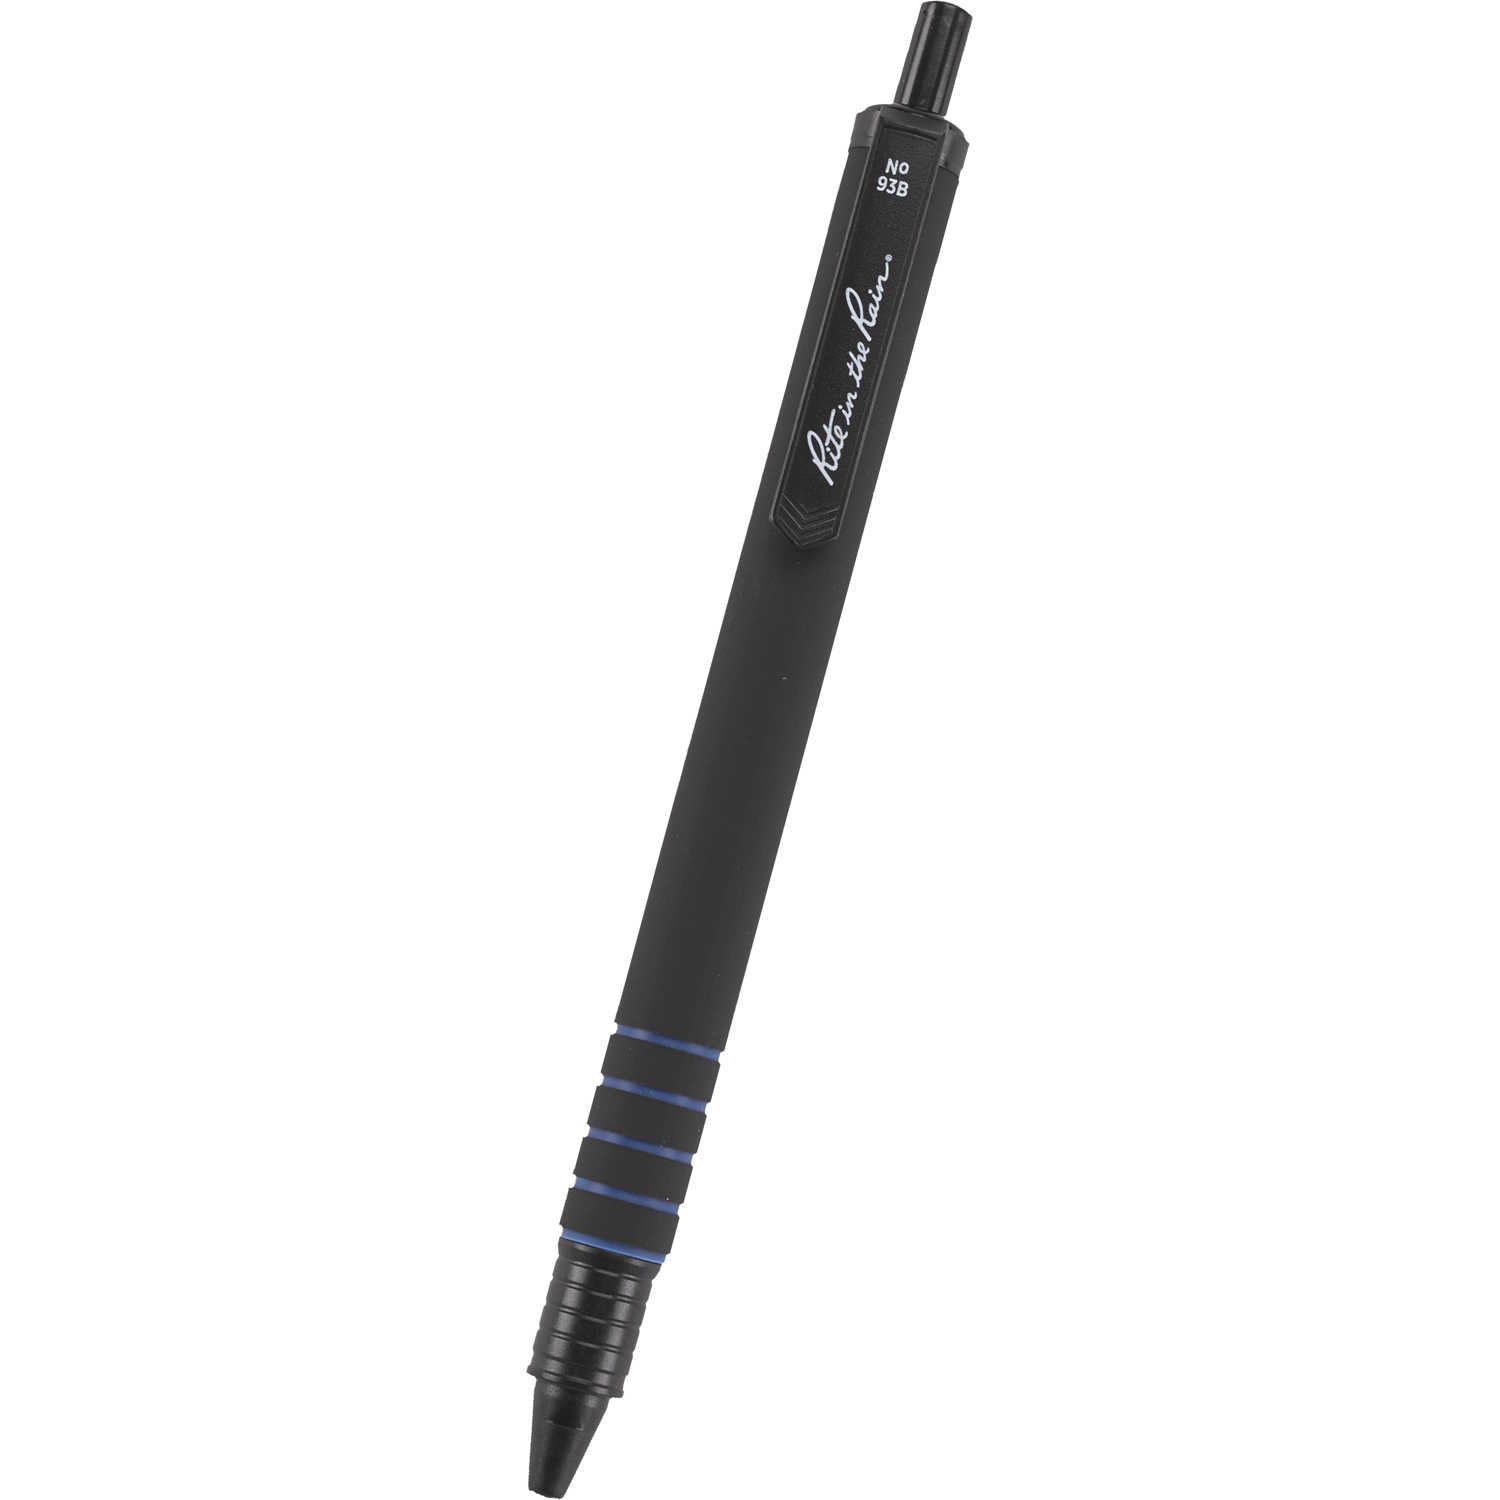 Rite in The Rain Weatherproof Durable Clicker Pen Od93 for sale online Black Ink No 